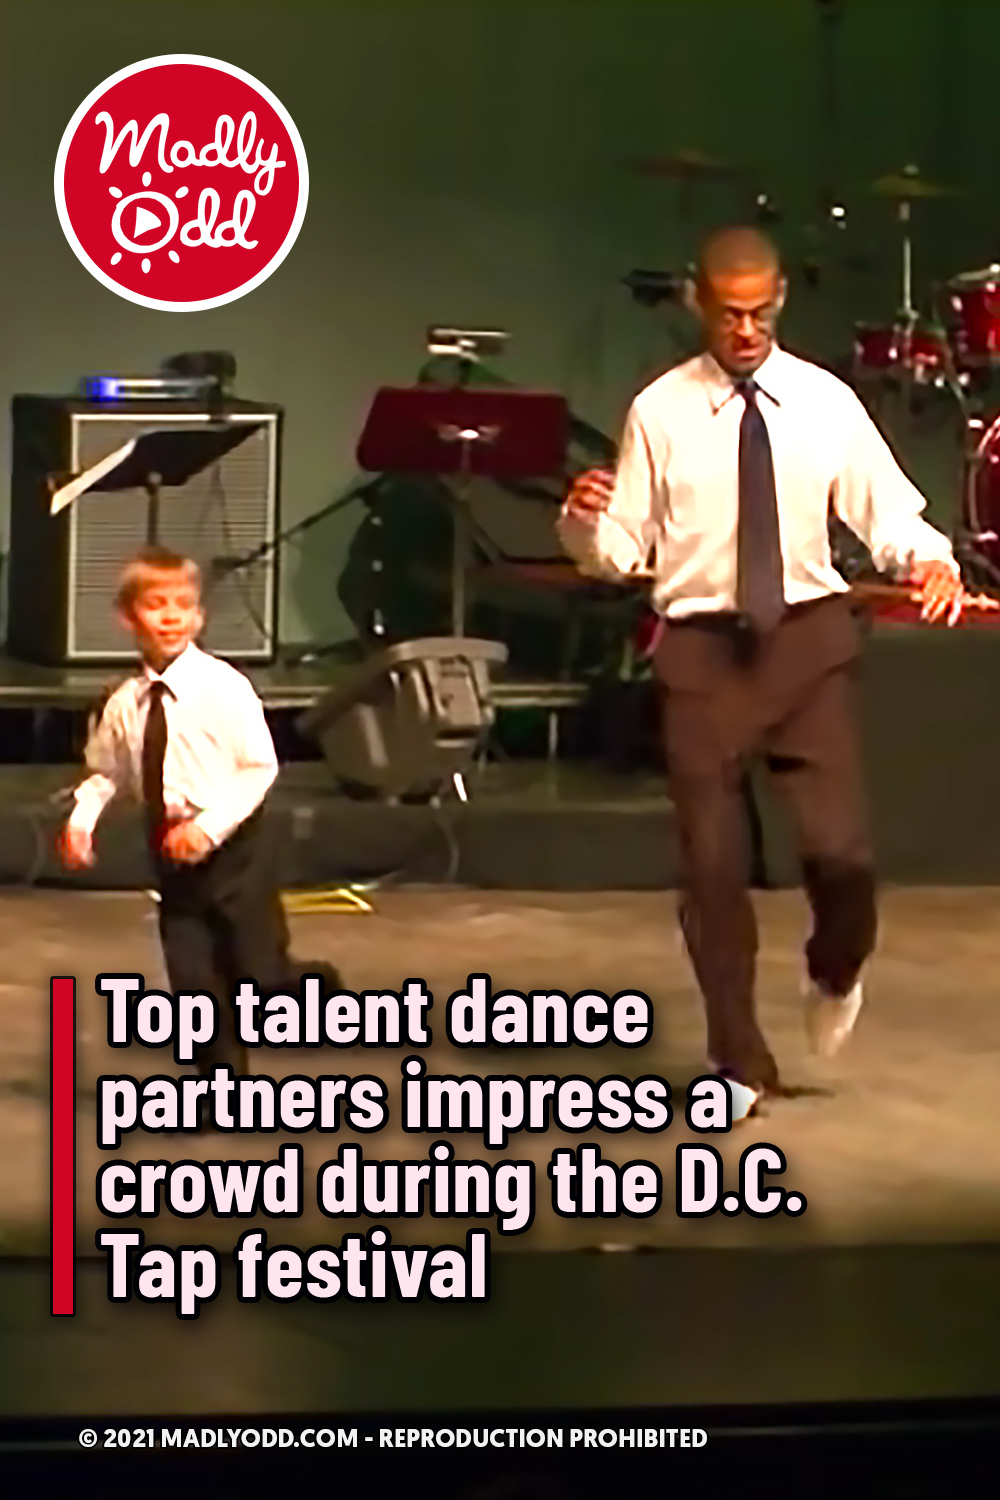 Top talent dance partners impress a crowd during the D.C. Tap festival